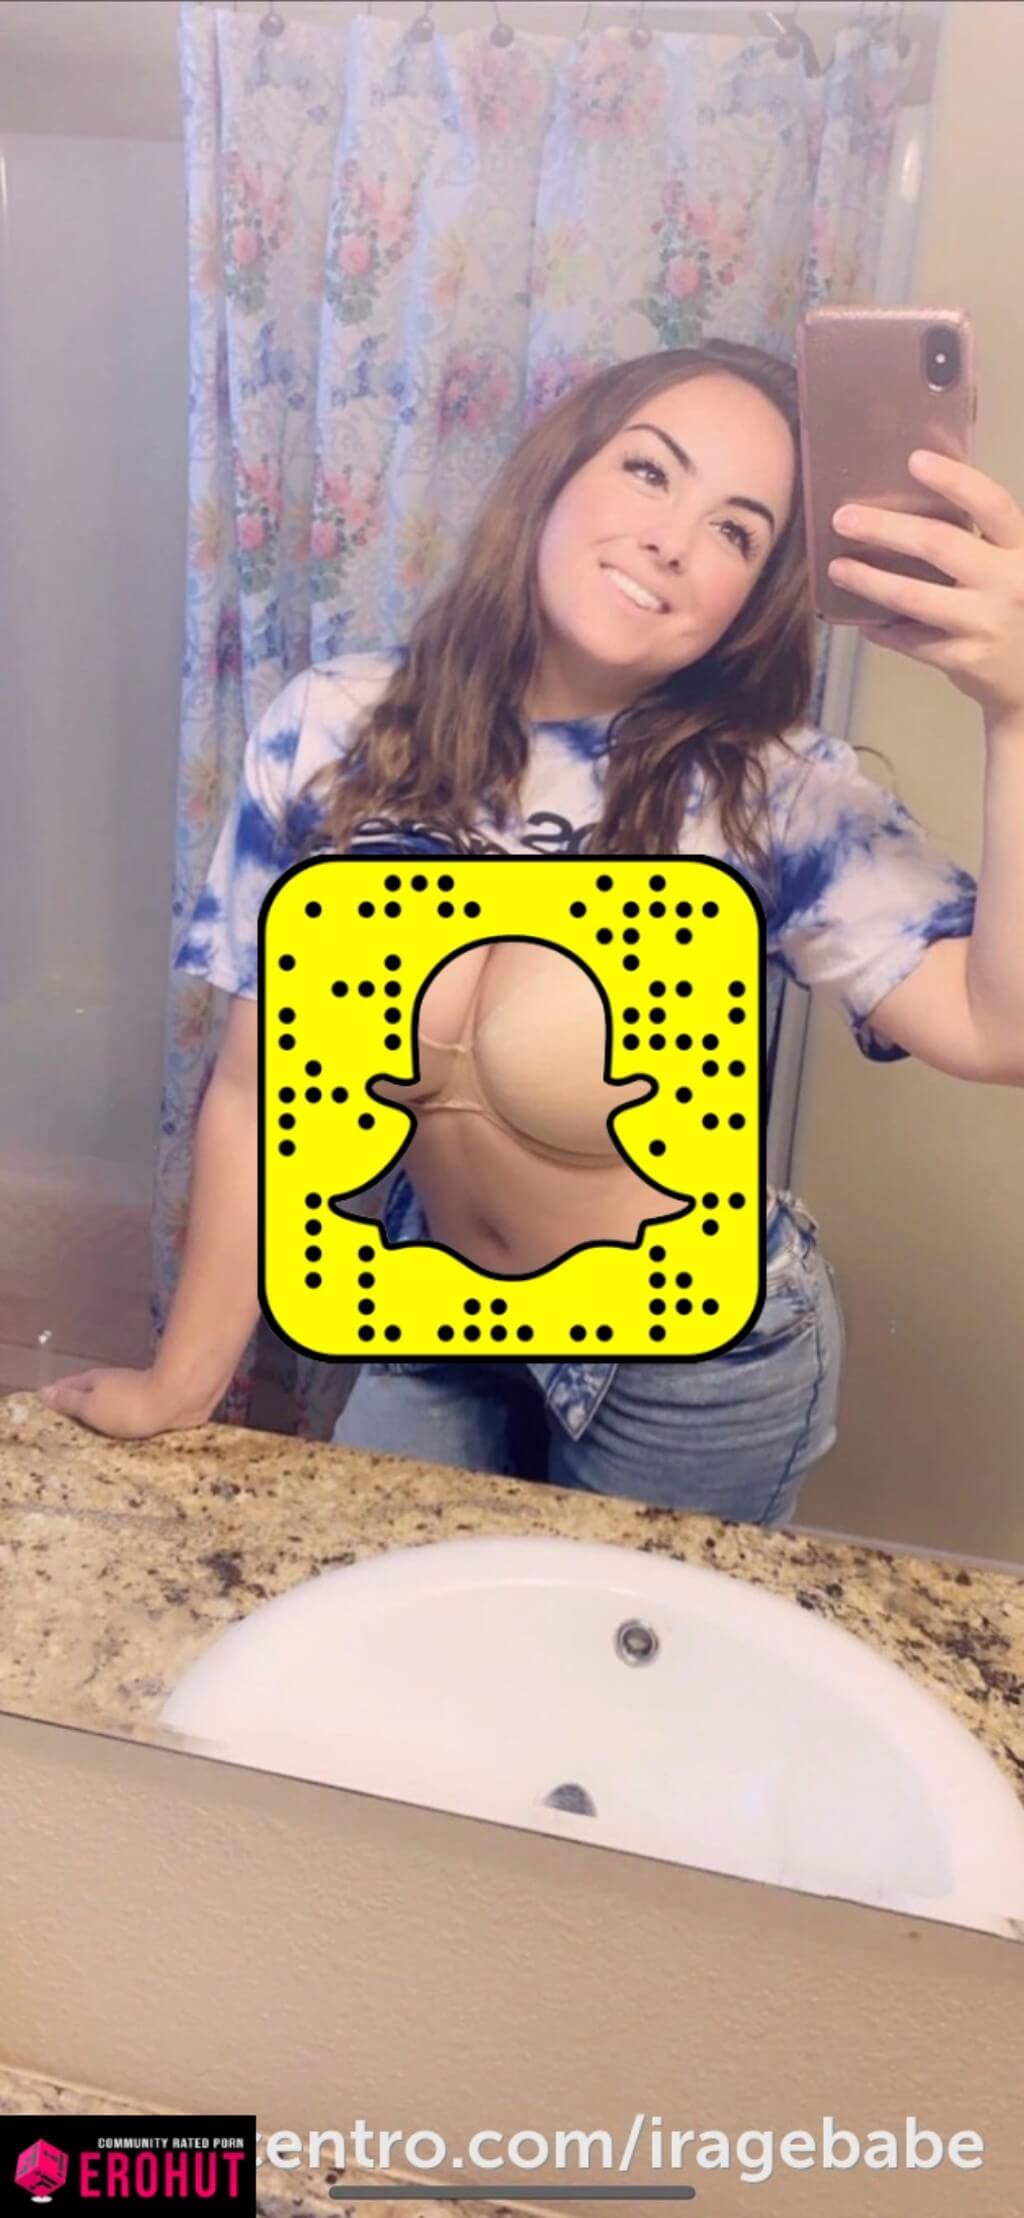 Snapchat porn videos accounts